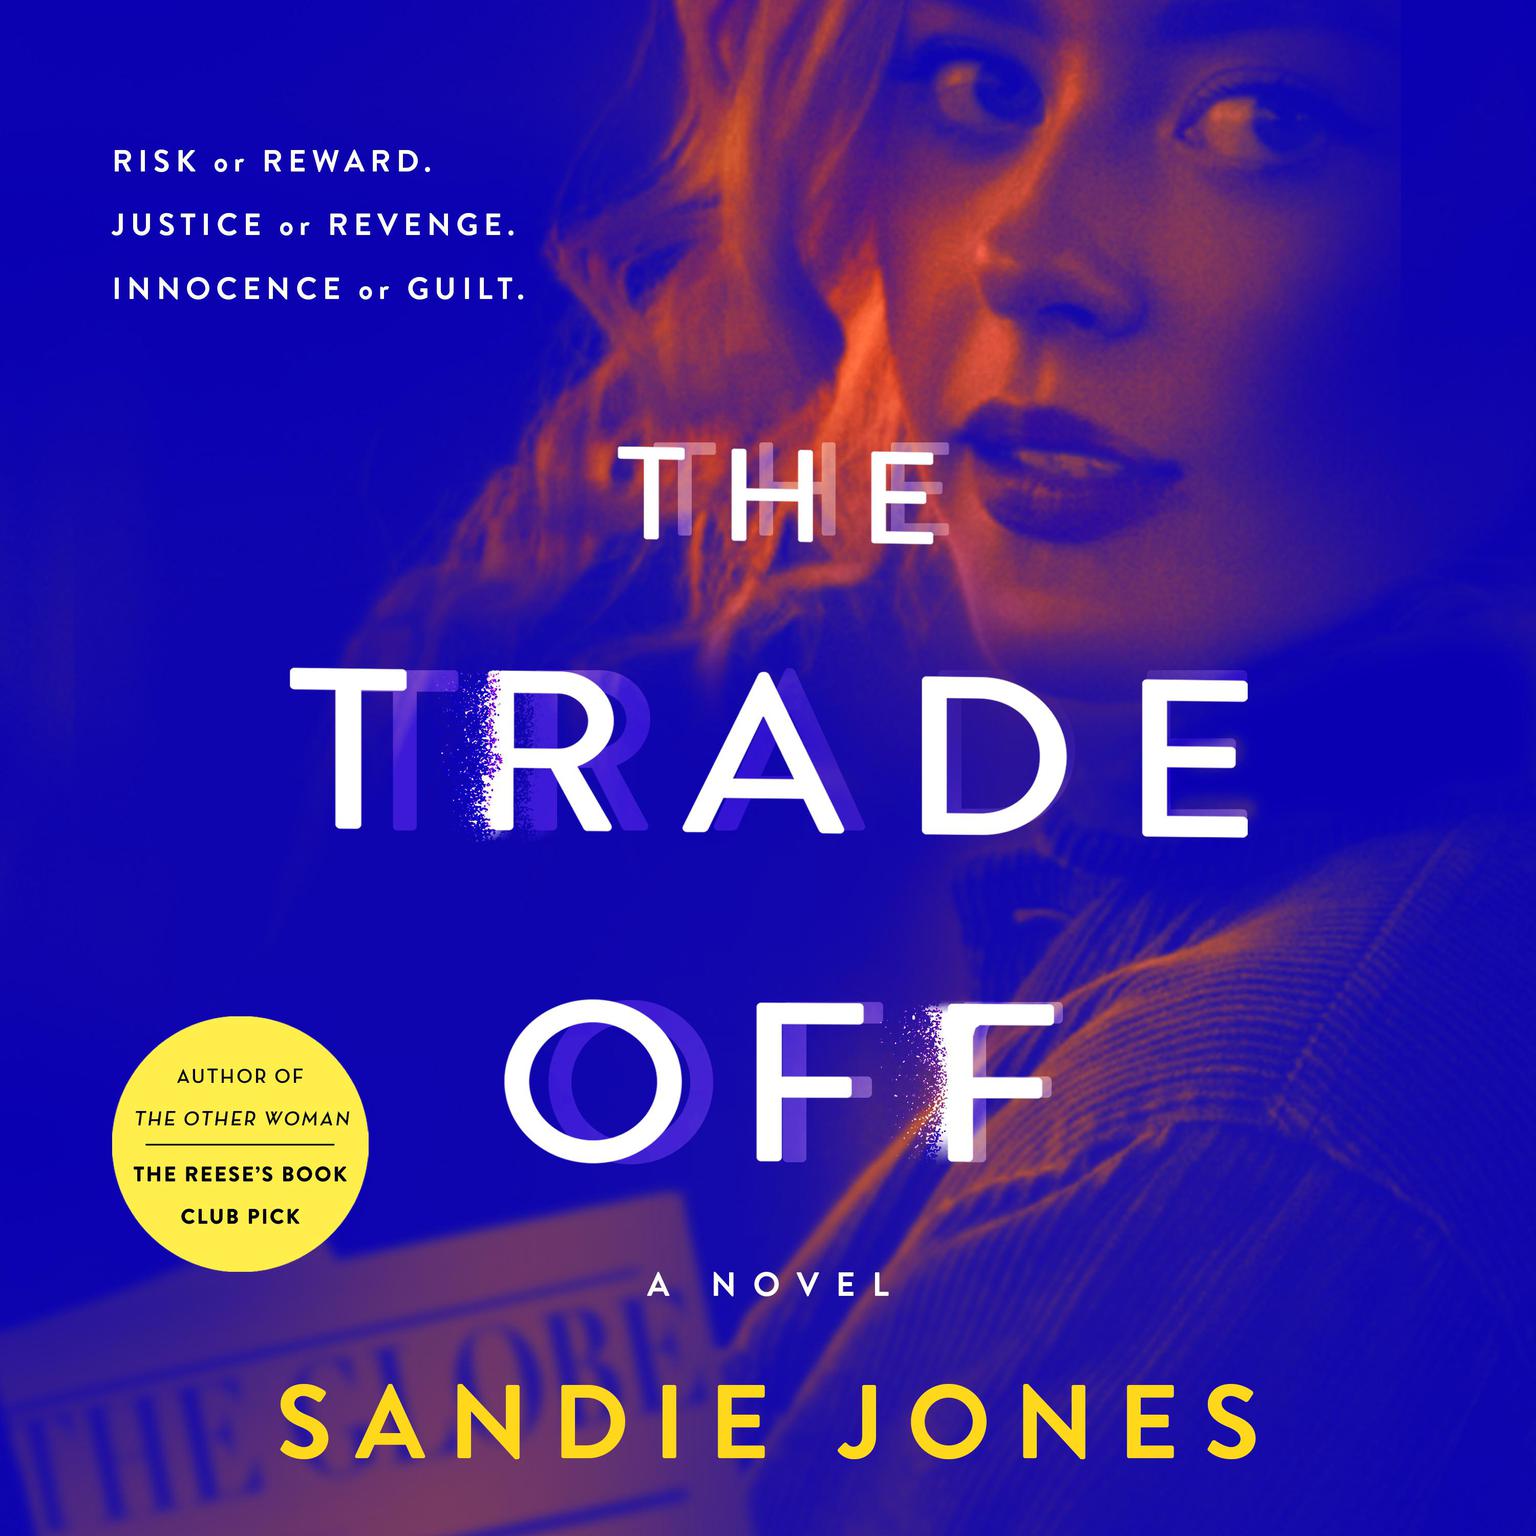 The Trade Off: A Novel Audiobook, by Sandie Jones